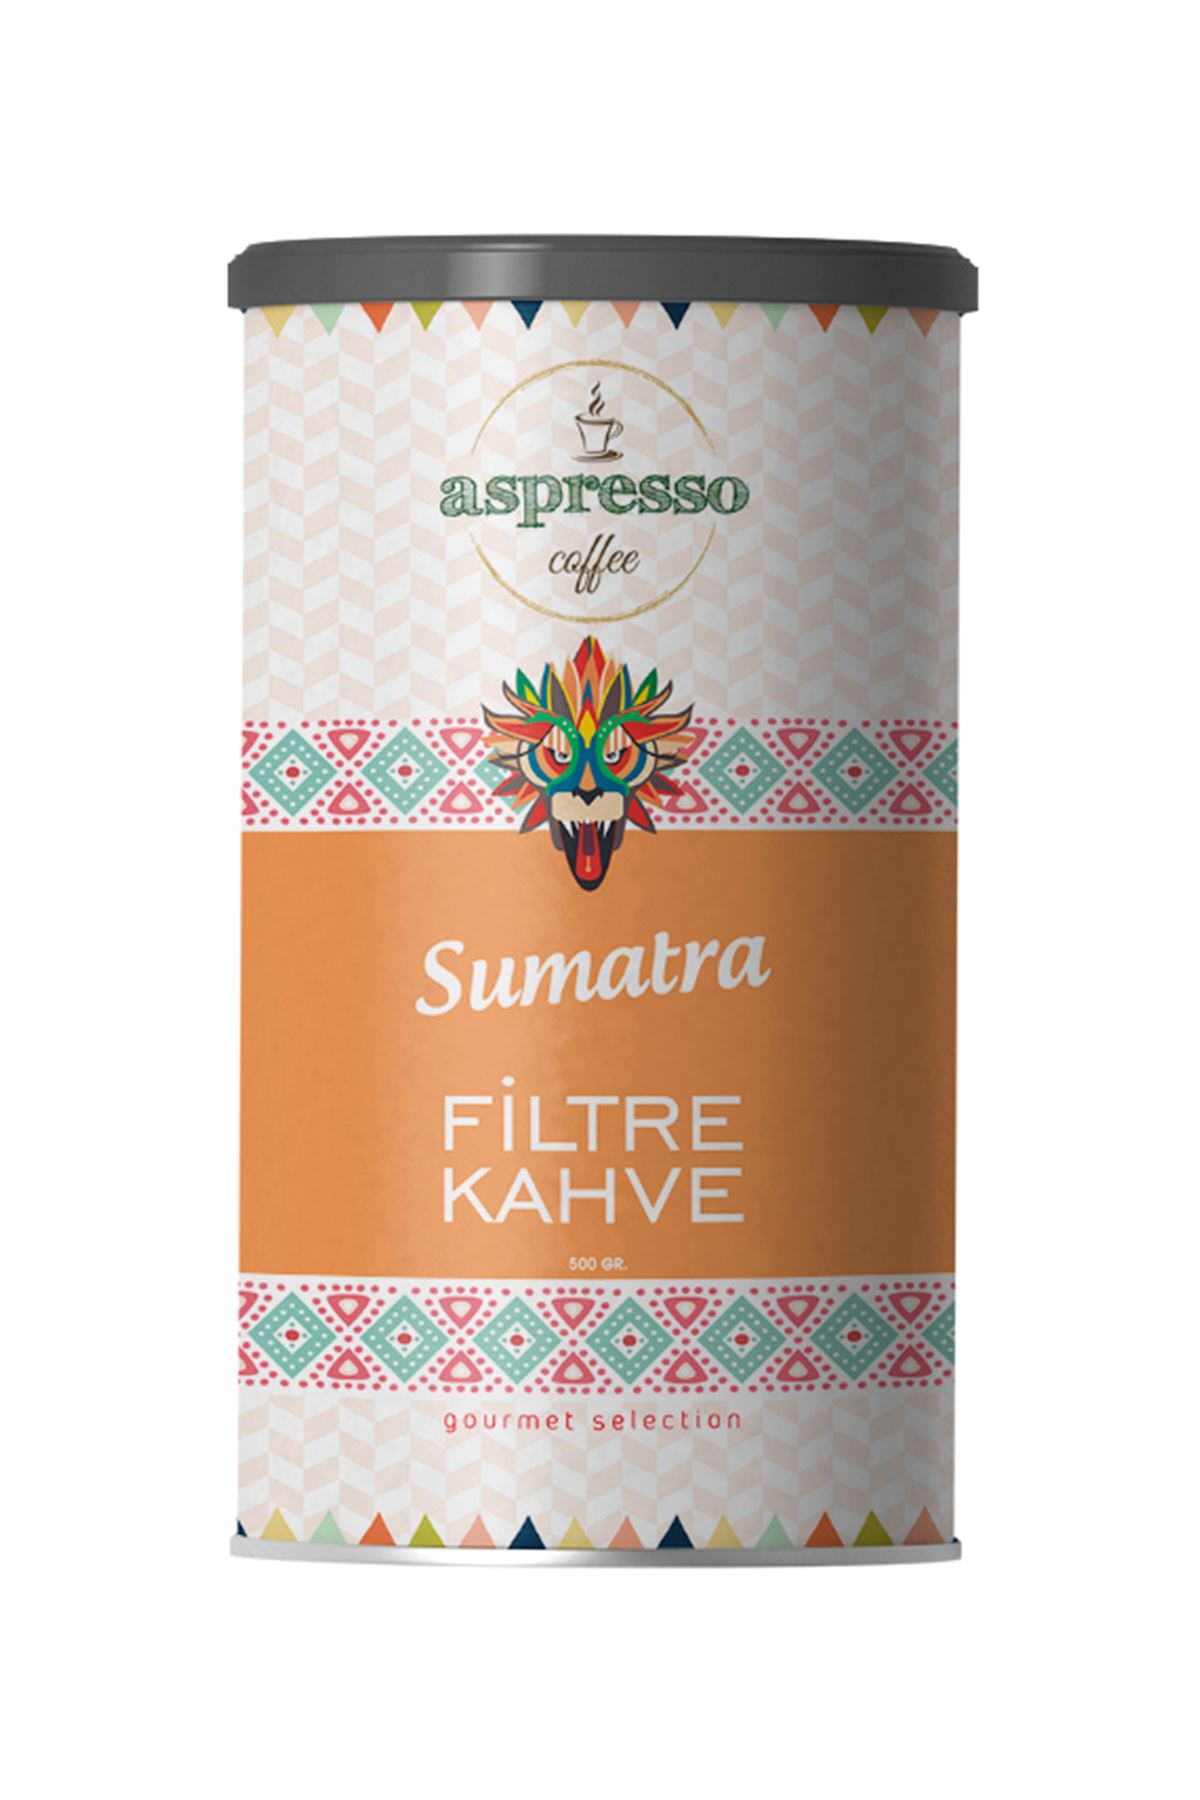 Sumatra Filtre Kahve 500 gr.